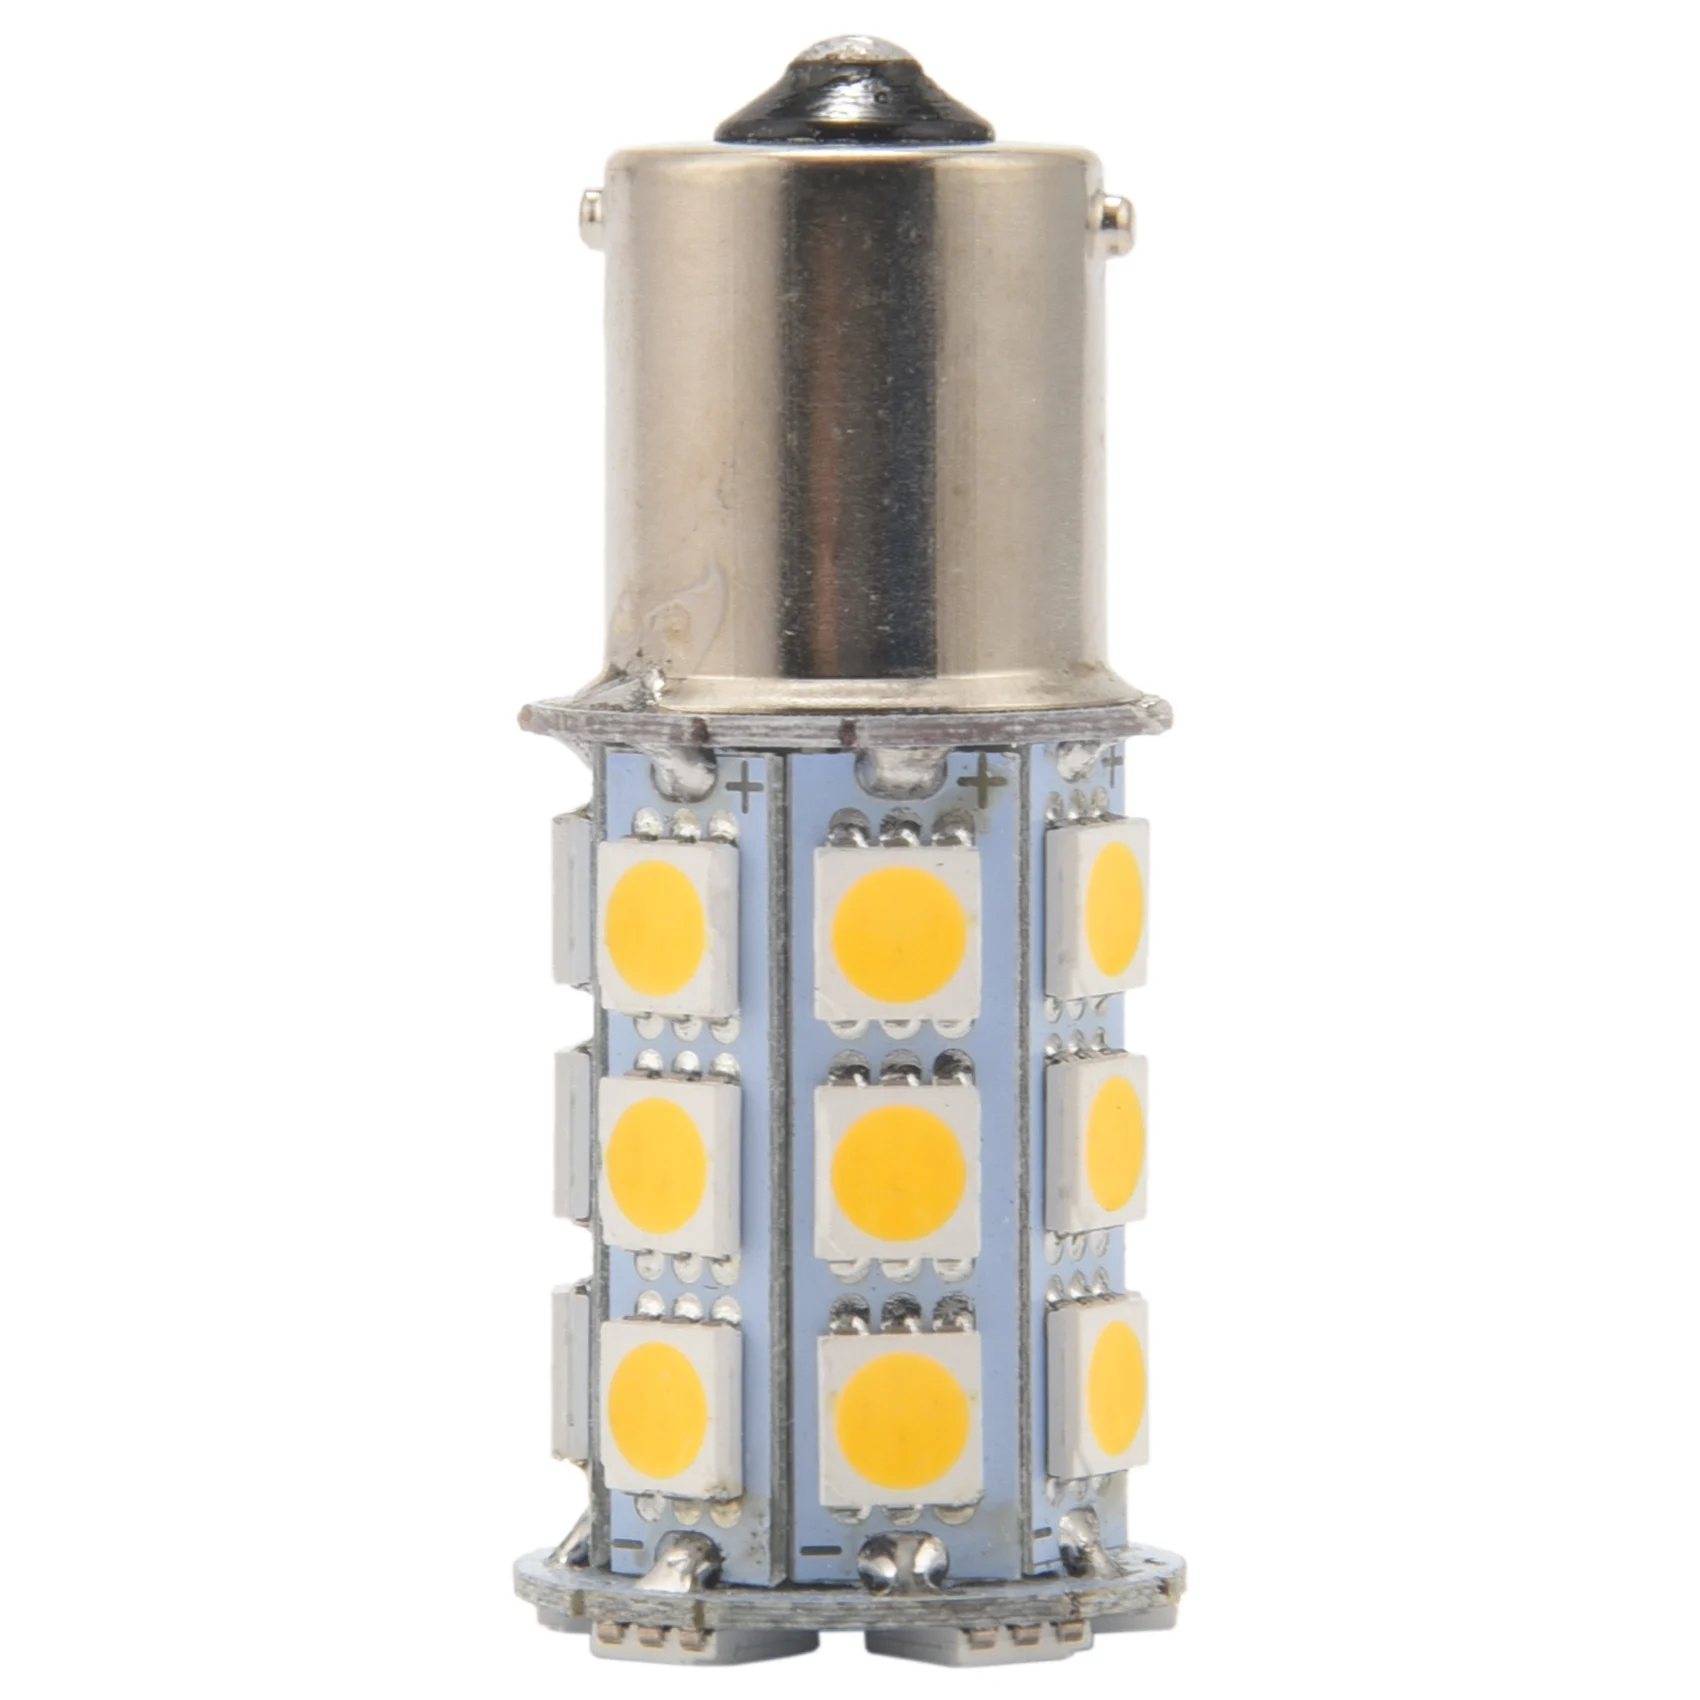 

10X Warm White 27 SMD LED 1156 1141 1003 RV Camper Trailer Interior Light Bulbs